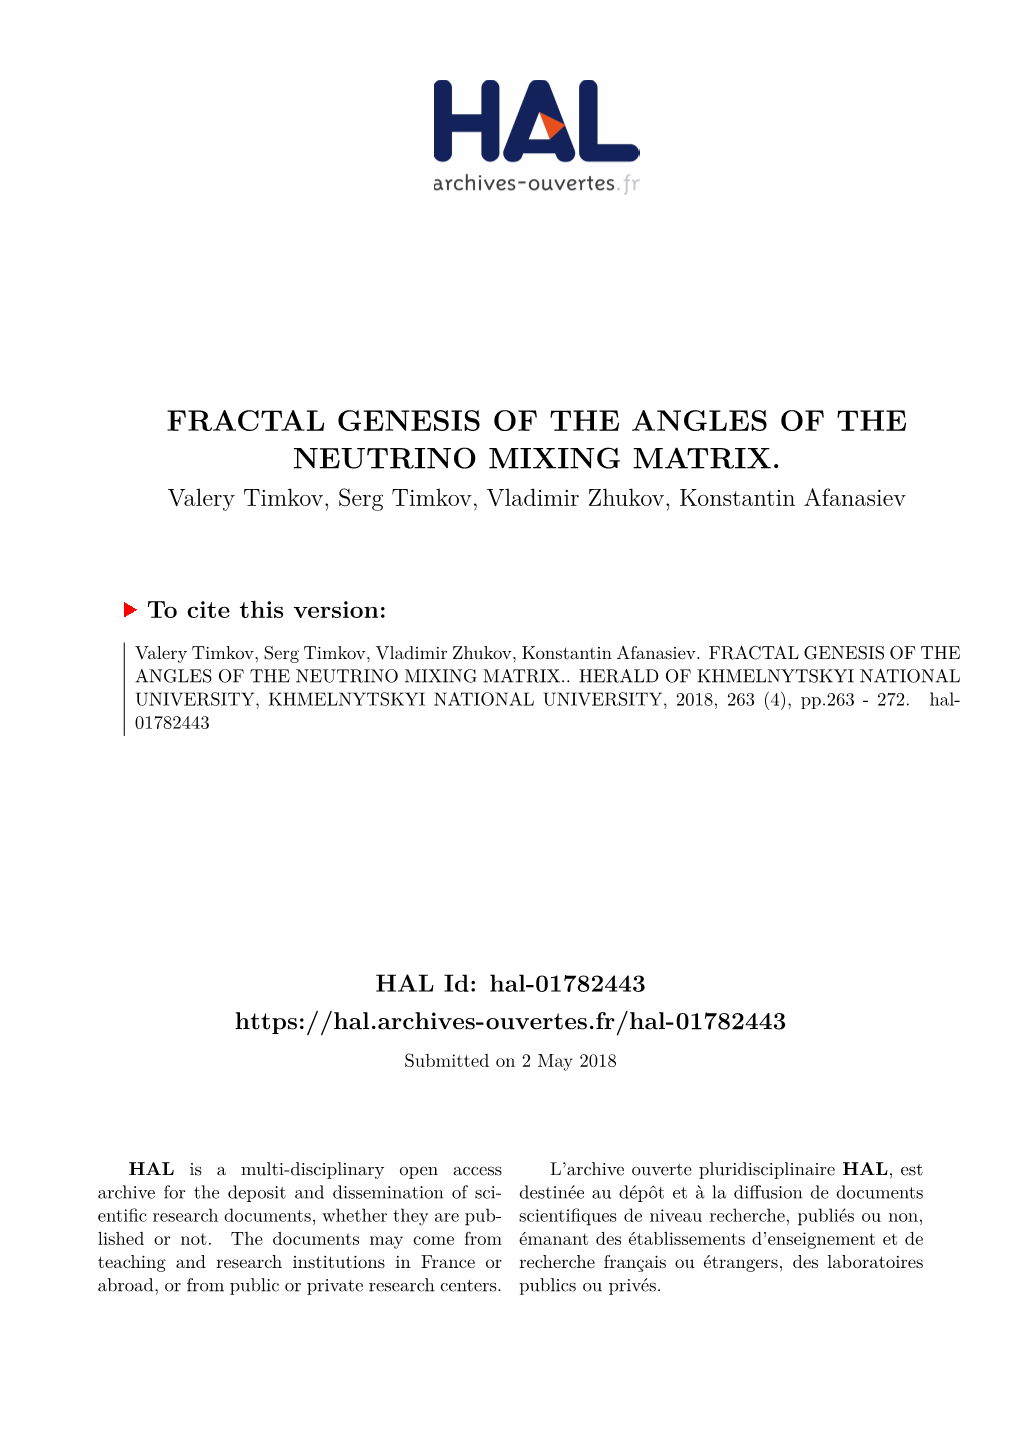 Fractal Genesis of the Angles of the Neutrino Mixing Matrix